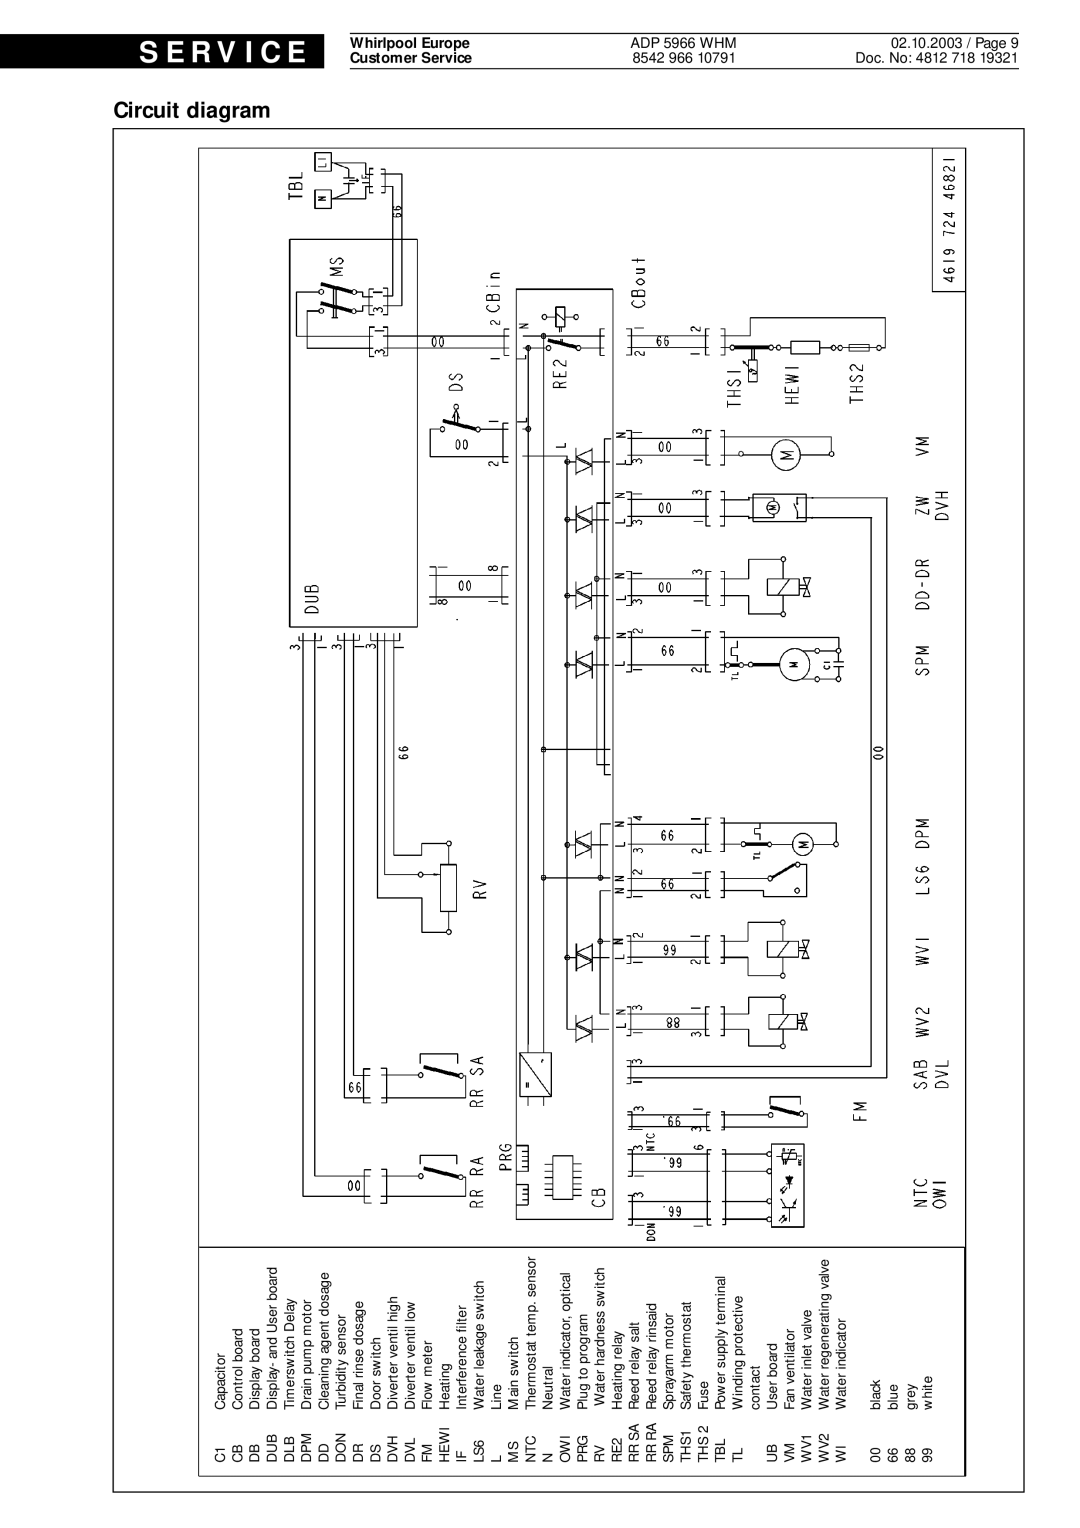 Whirlpool ADP 5966 WHM service manual Circuit, diagram, R V I C, Whirlpool Europe Customer Service 